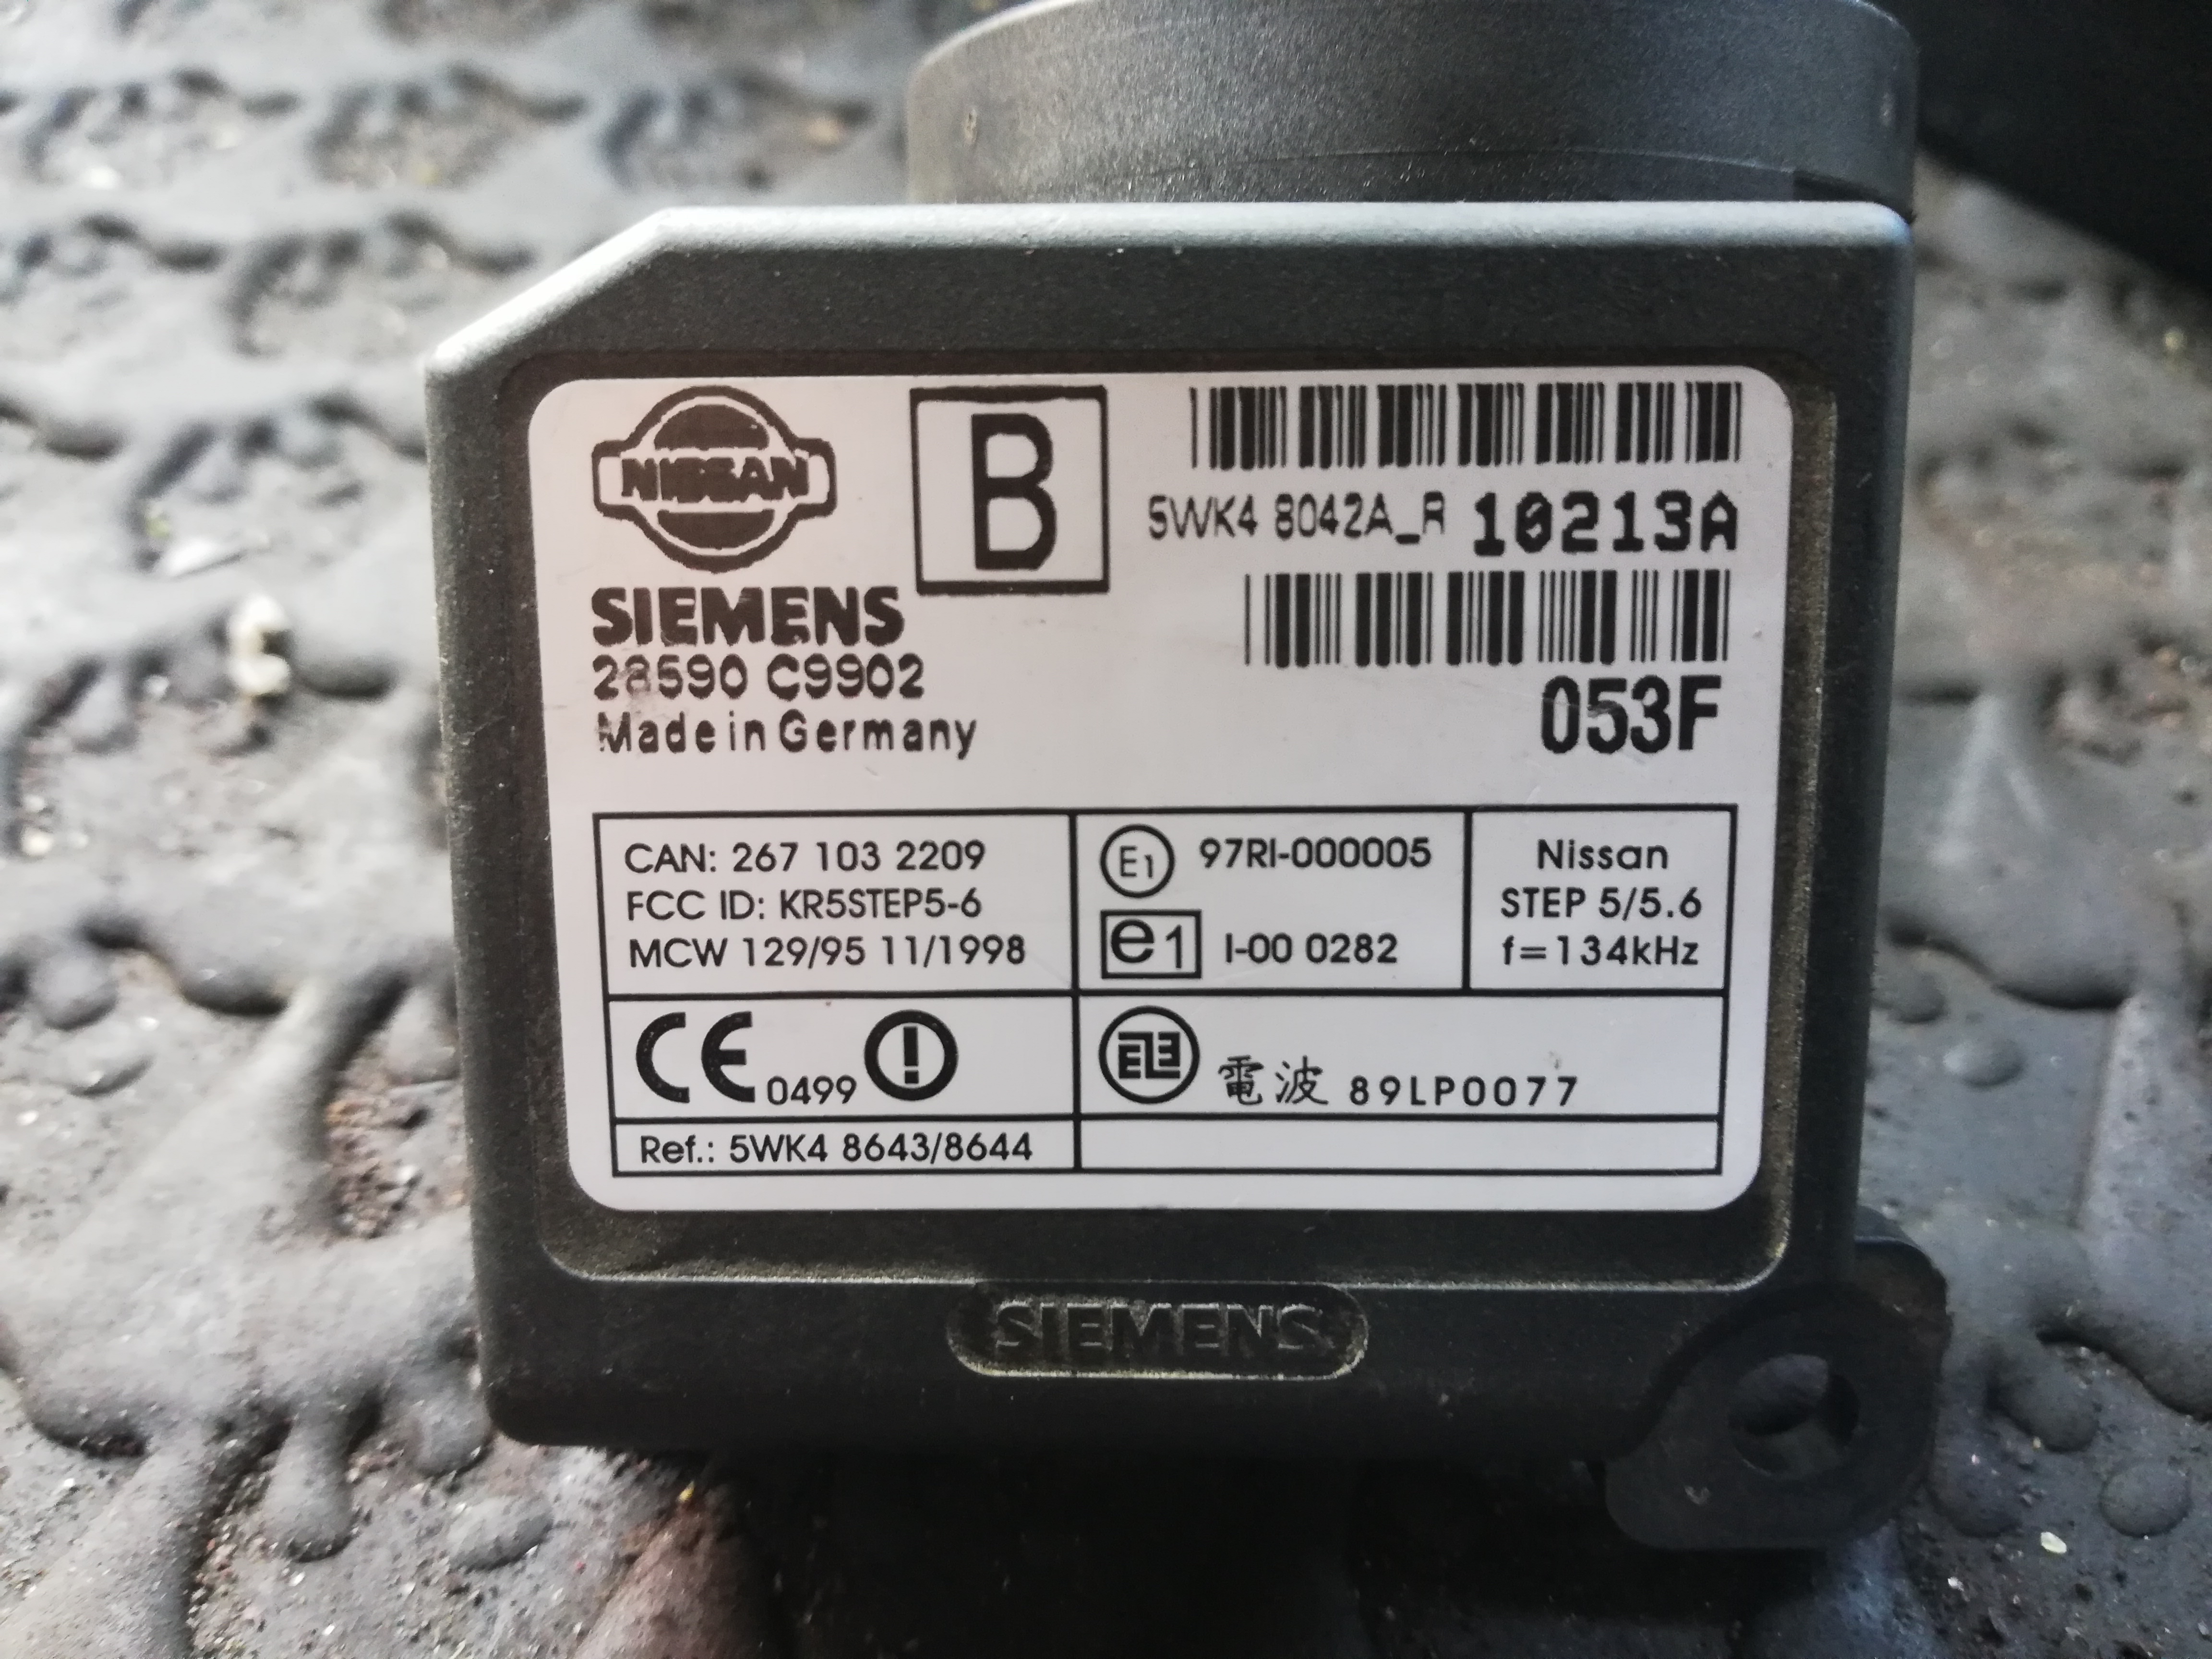 Nissan almera n16 rozkodowany system NATS elektroda.pl